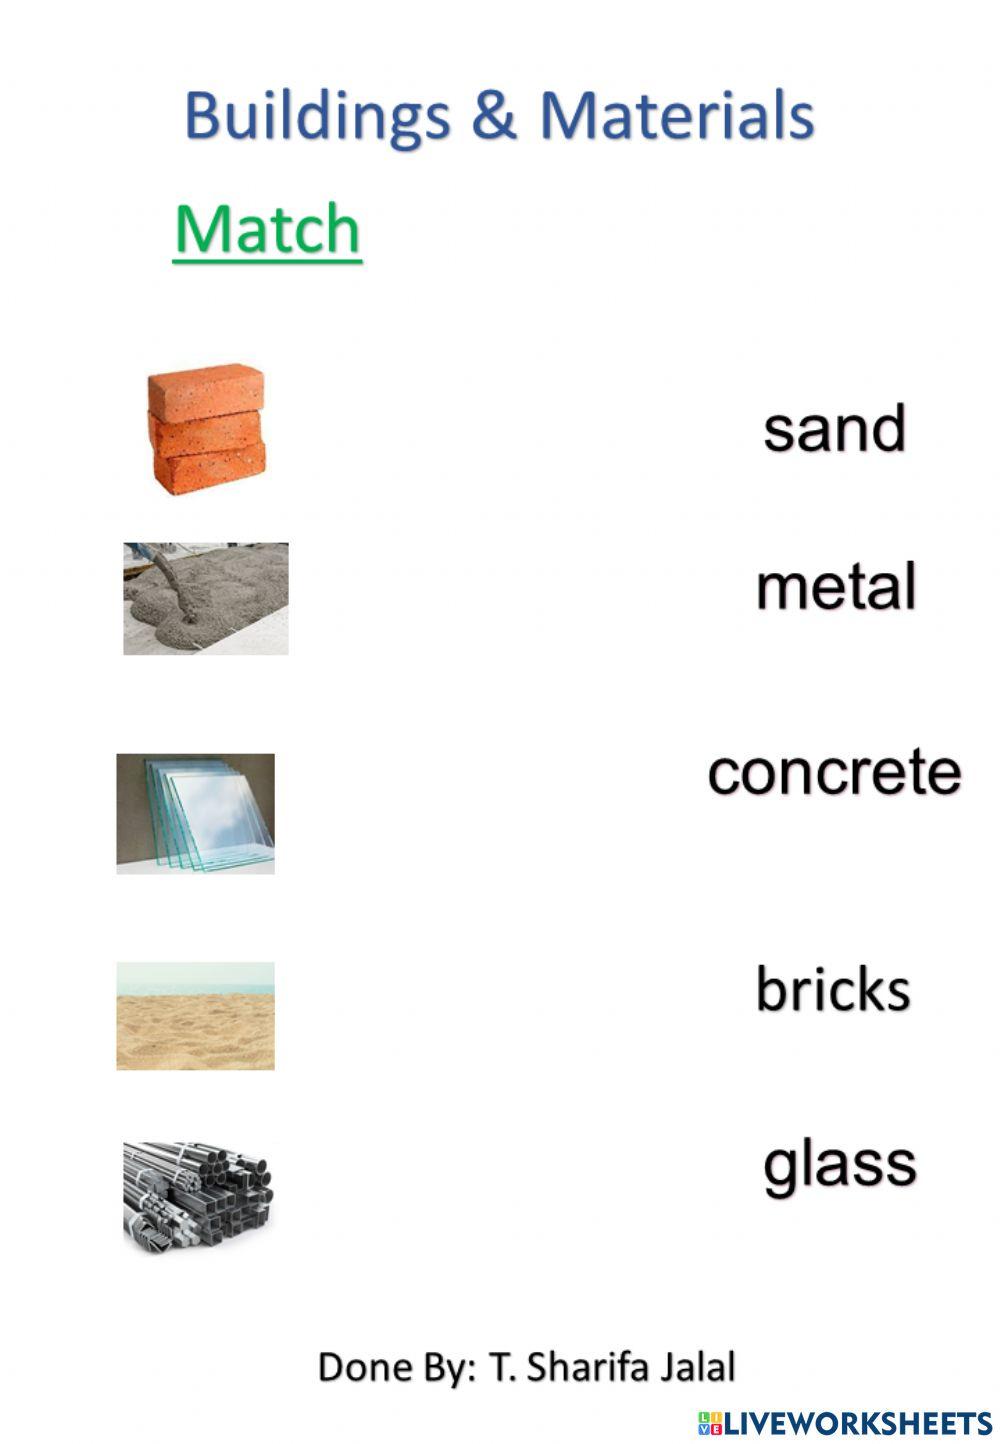 Buildings & Materials